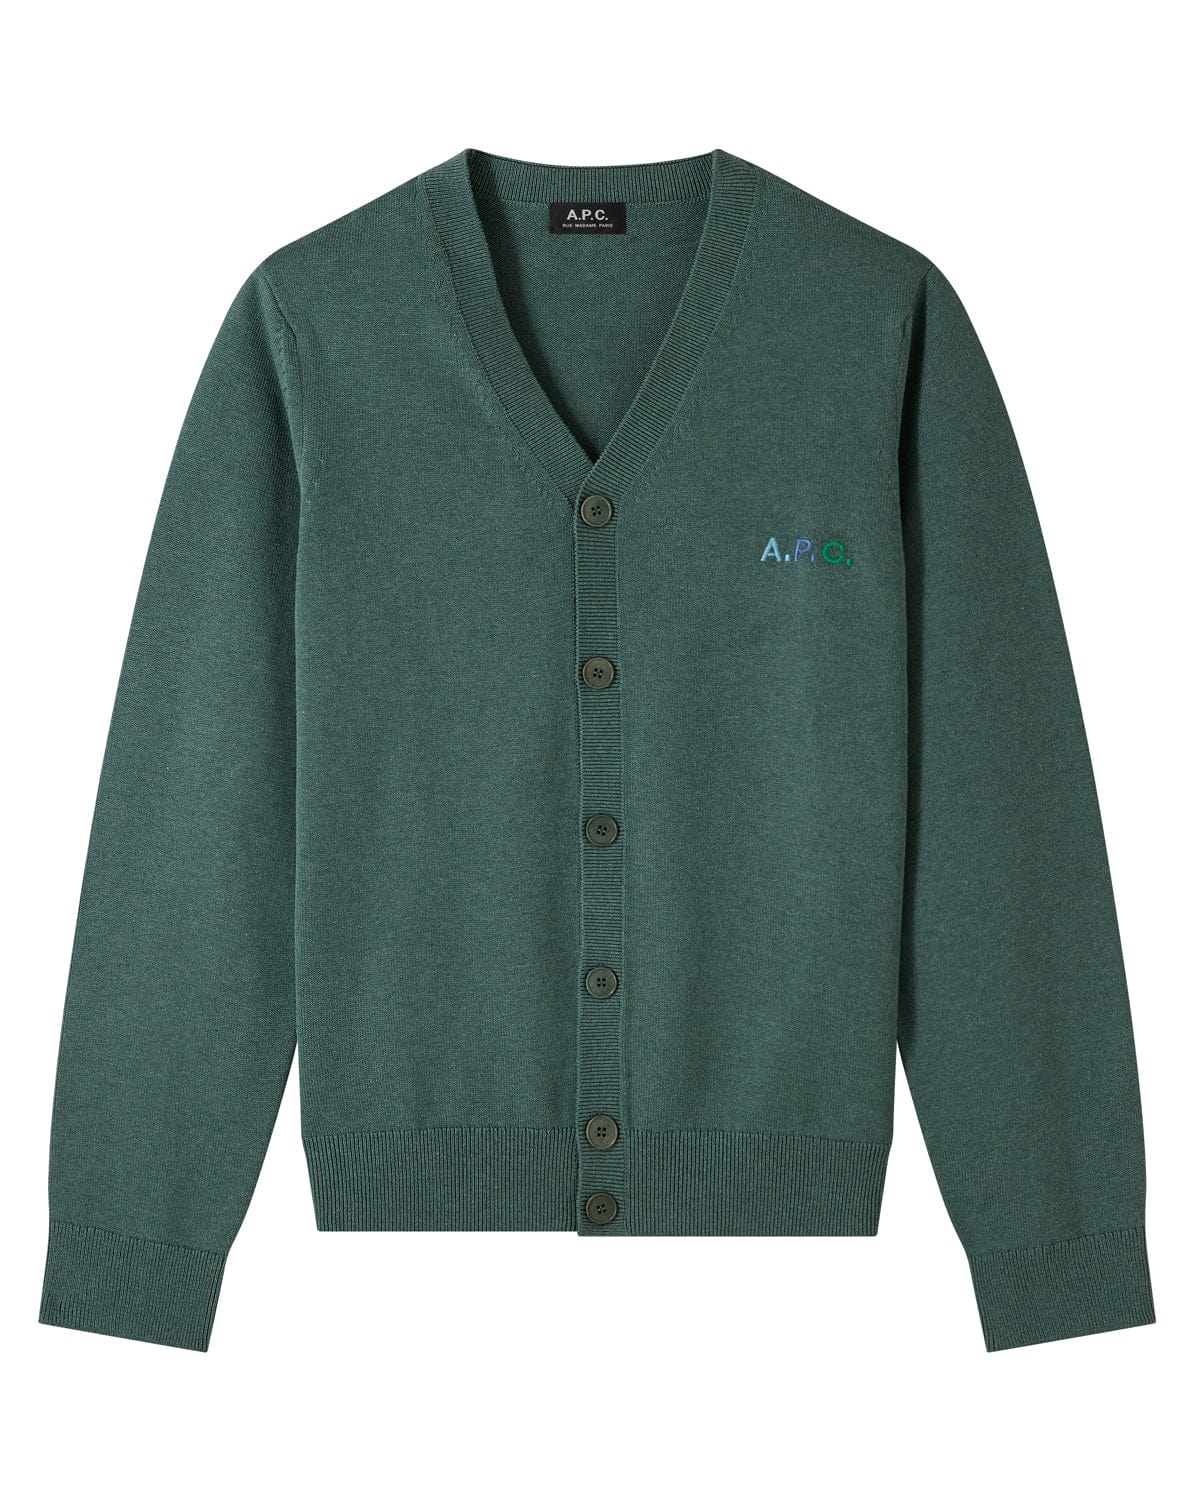 A.P.C. New Cardigan Joseph Heathered Green Knitwear Men